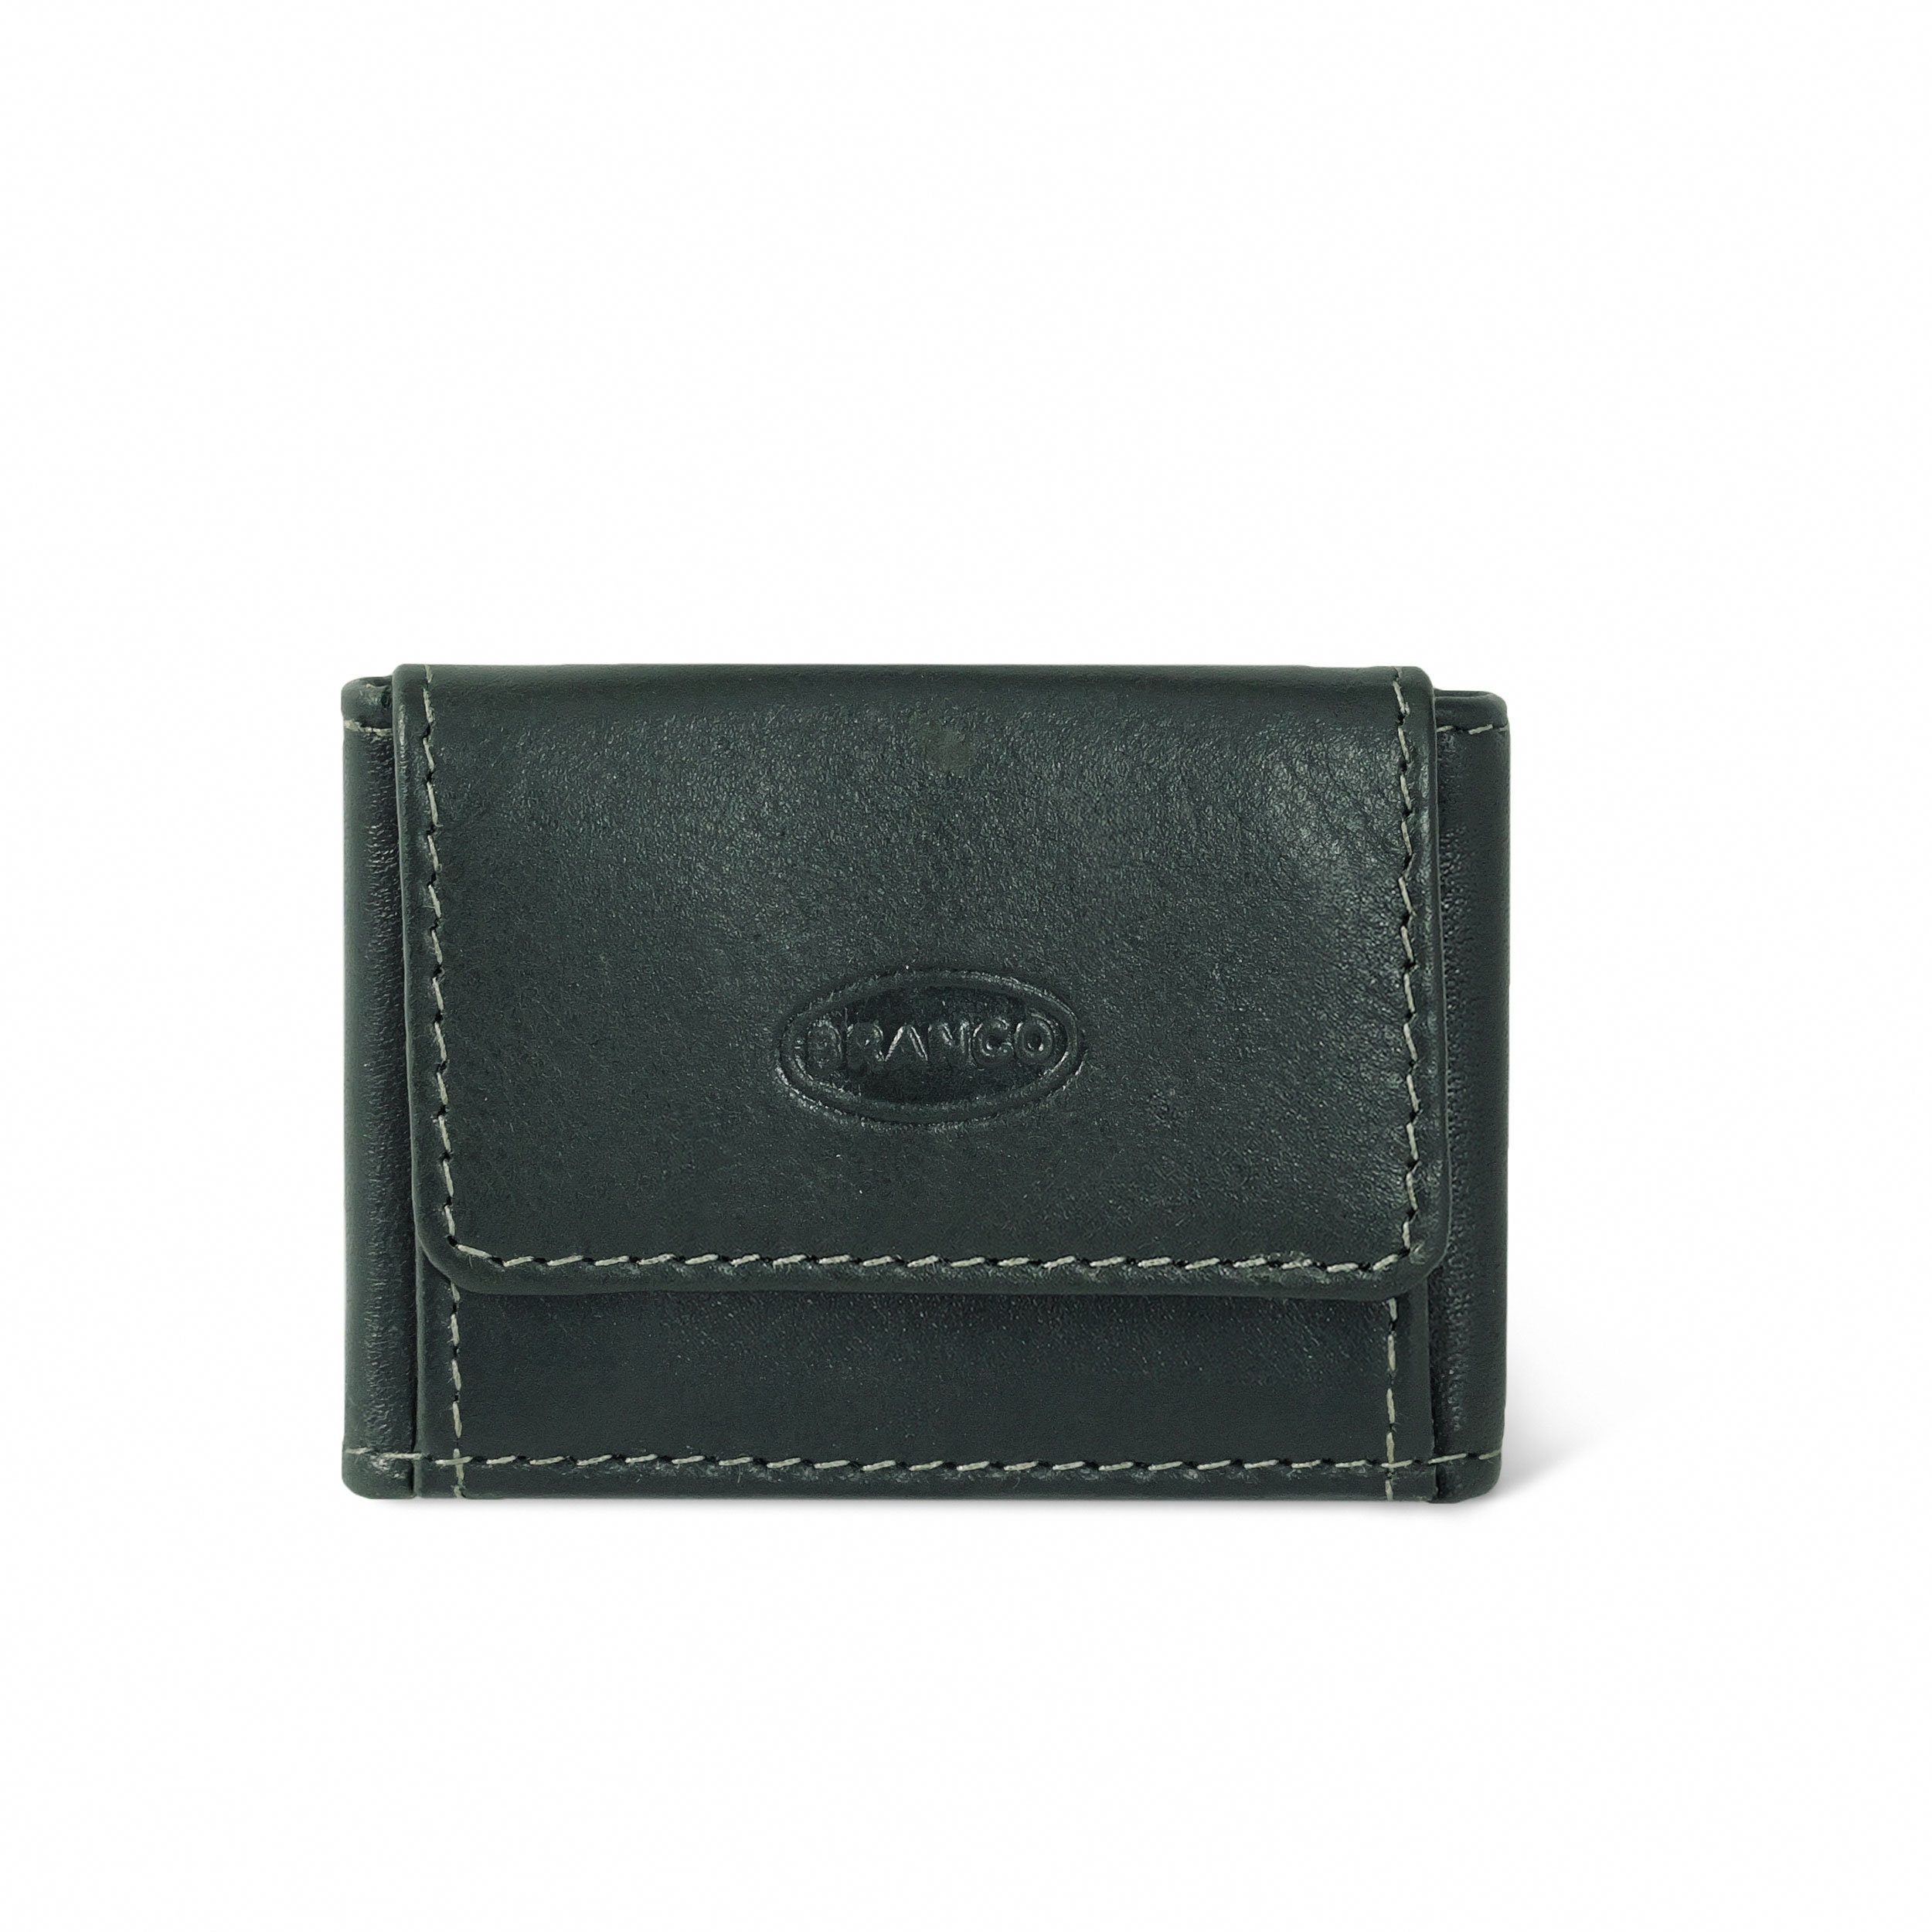 Buy Alexvyan Small Women's Purse Wallet Female Hand Clutch  Women/Ladies/Girls Wallets Card Holder 3 Pocket (Green) at Amazon.in